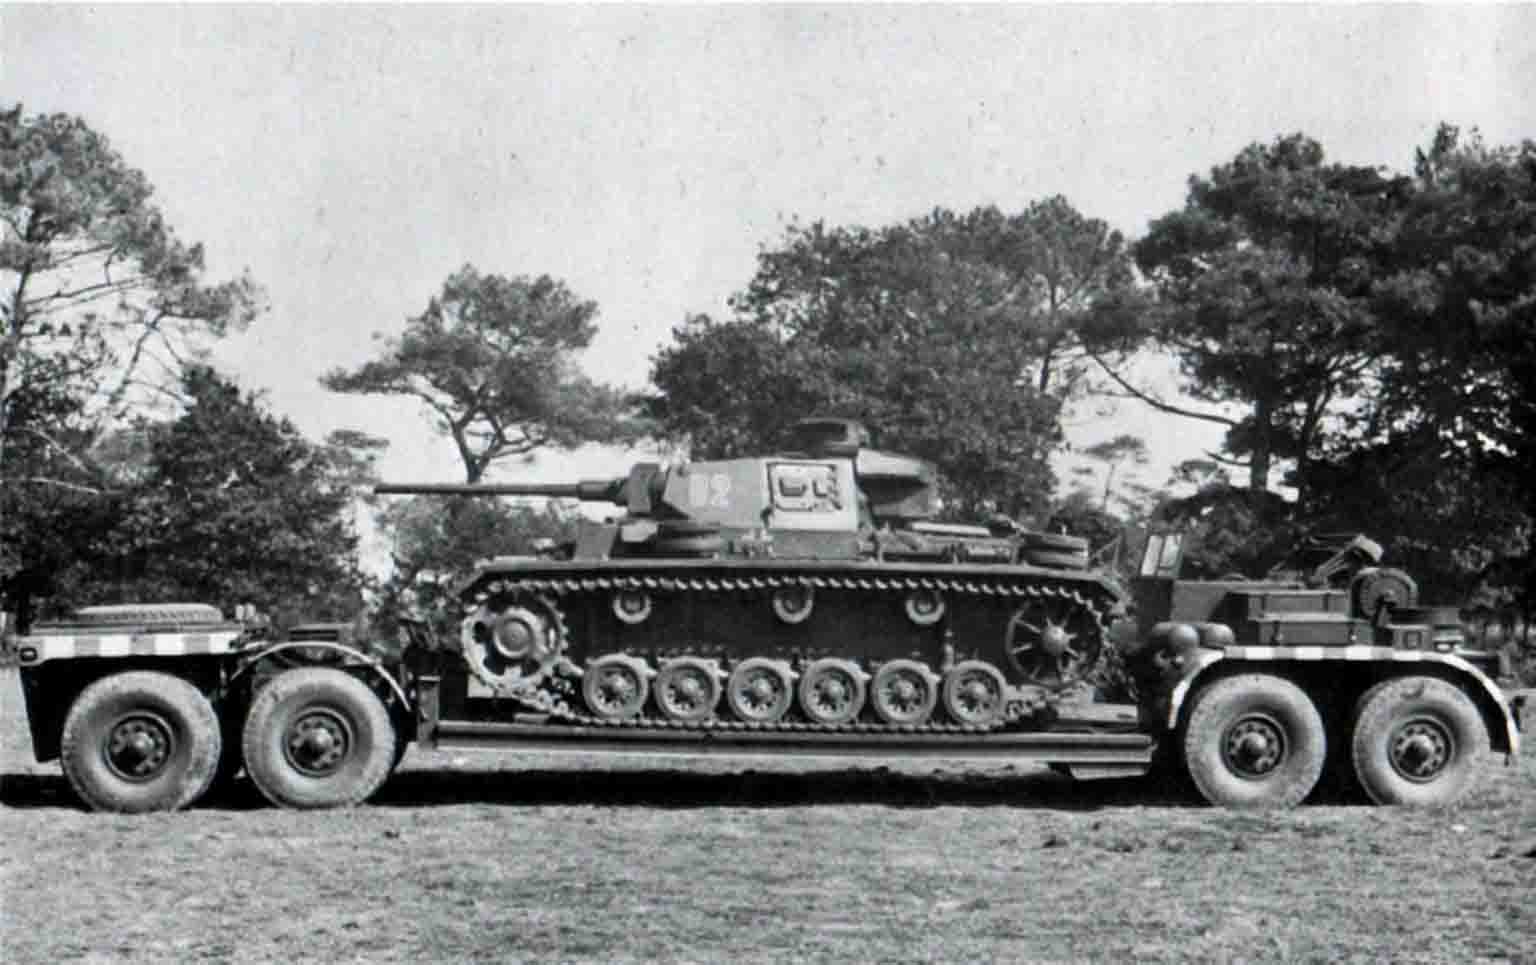 PzKpfw III Ausf. L